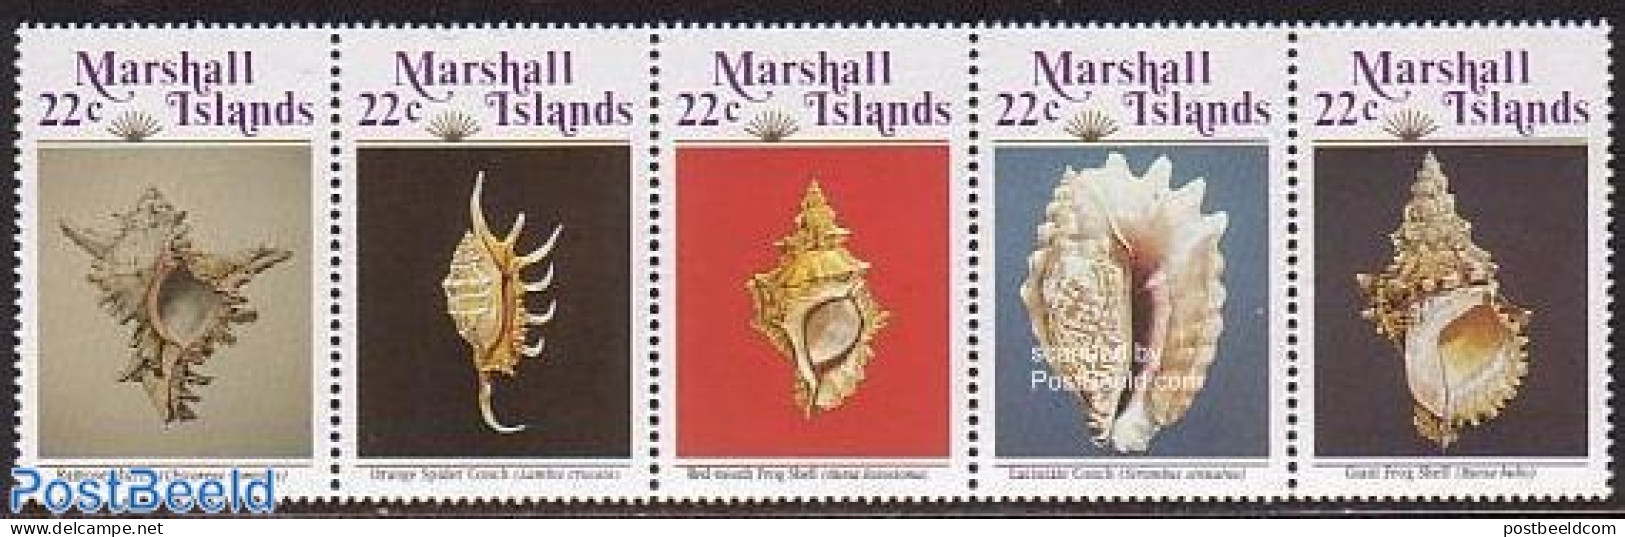 Marshall Islands 1986 Shells 5v [::::], Mint NH, Nature - Shells & Crustaceans - Marine Life